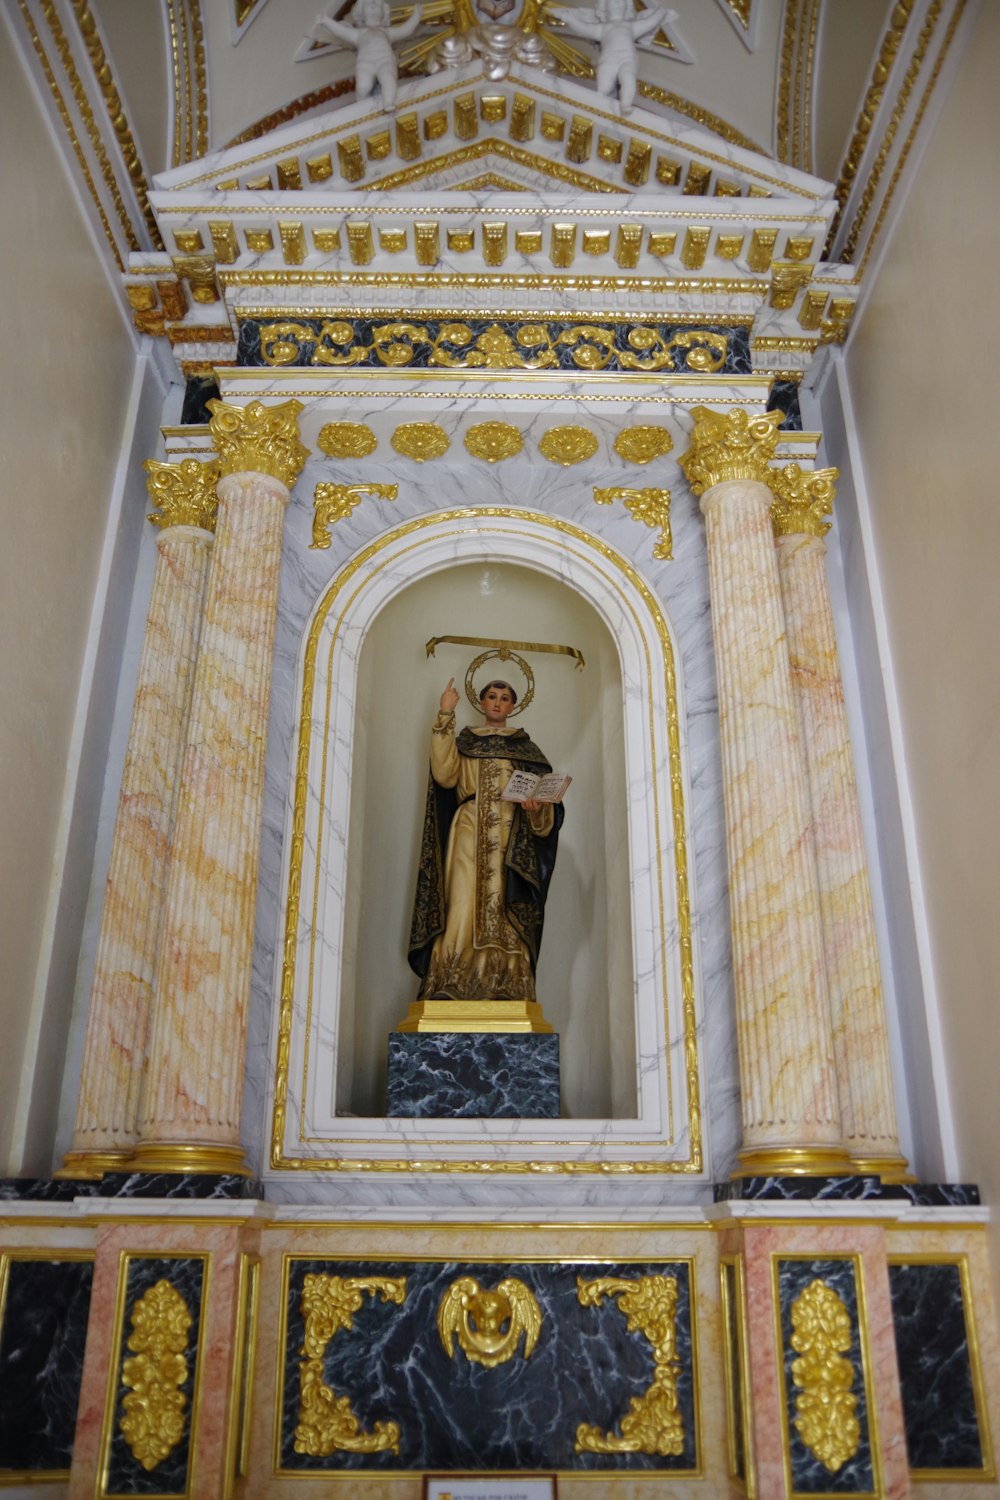 a statue of a person in a church